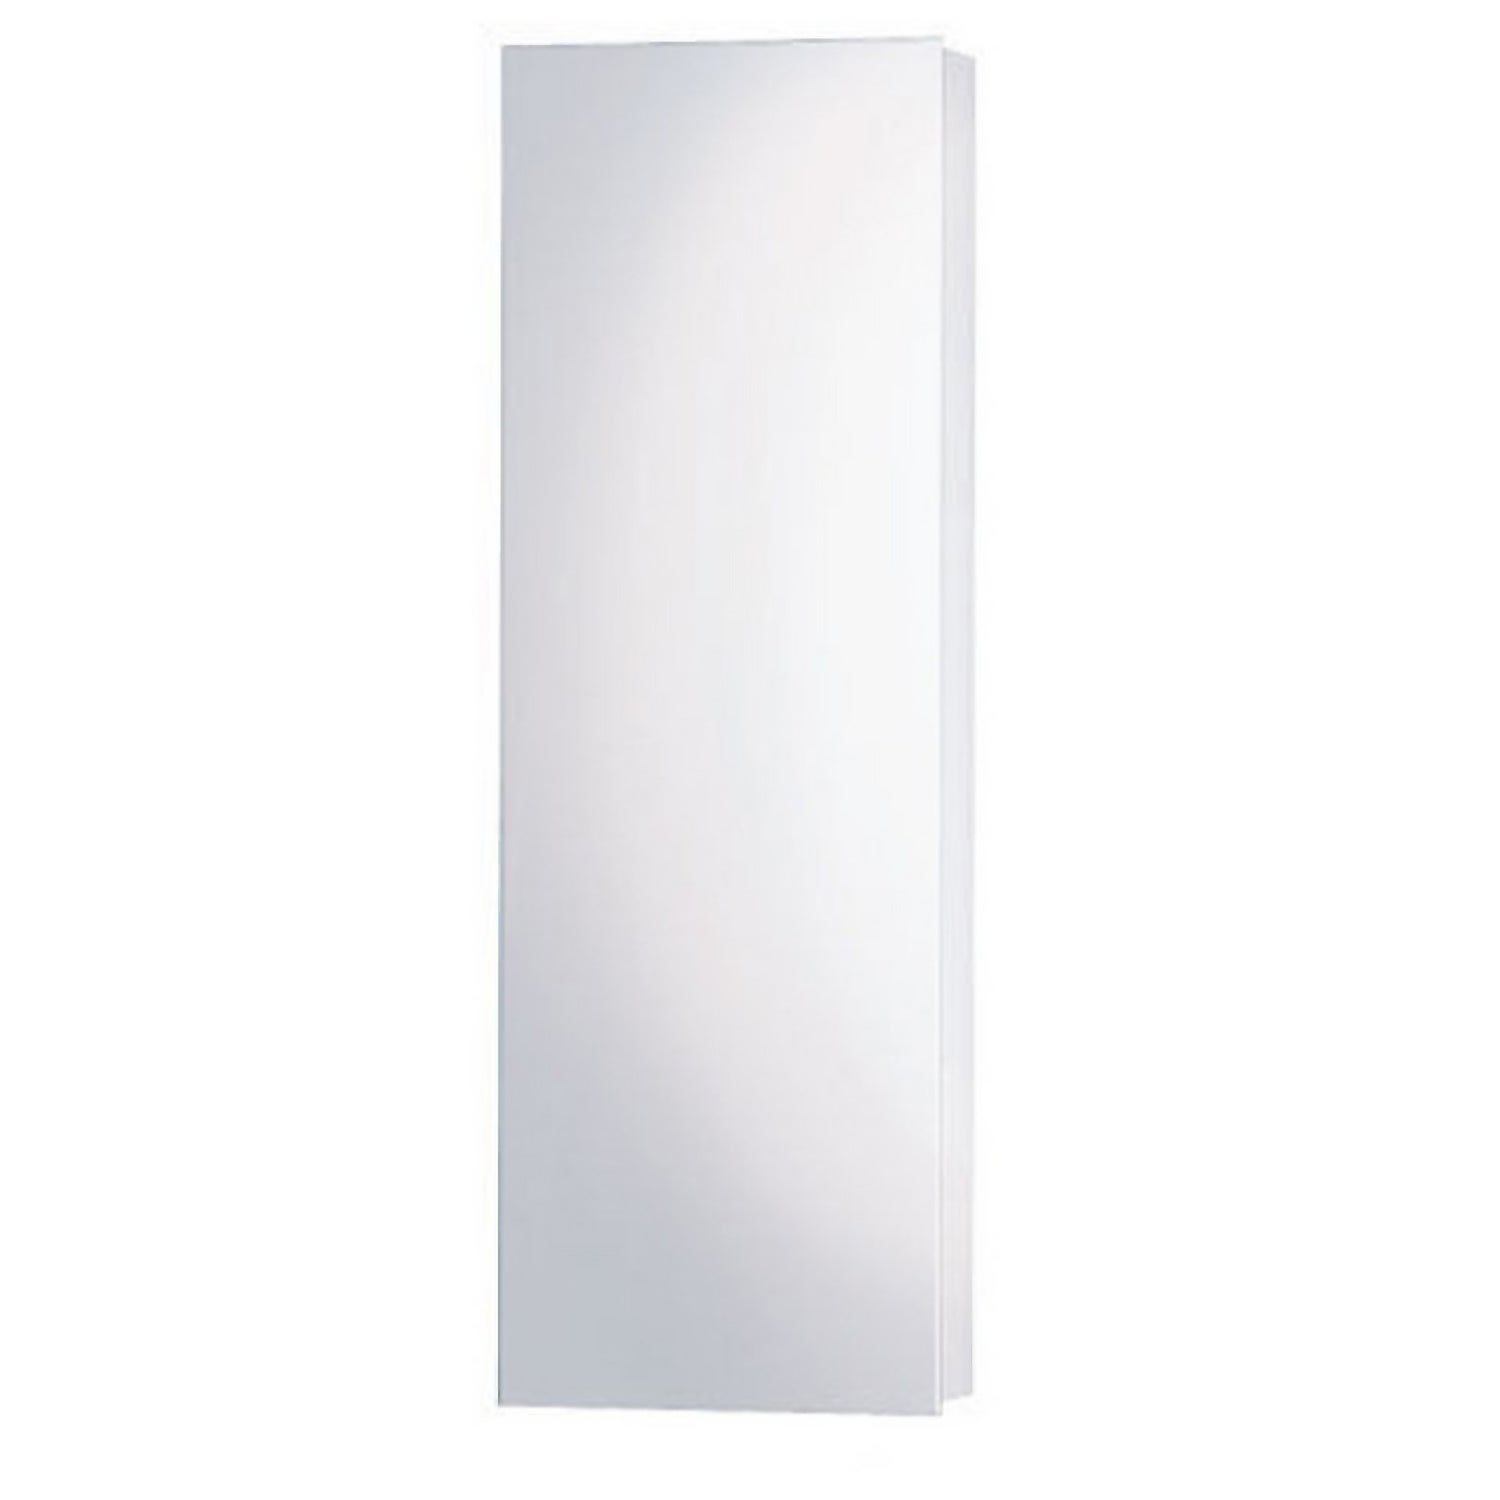 Micra Slim Stainless Steel Bathroom Mirror Cabinet 200x600mm